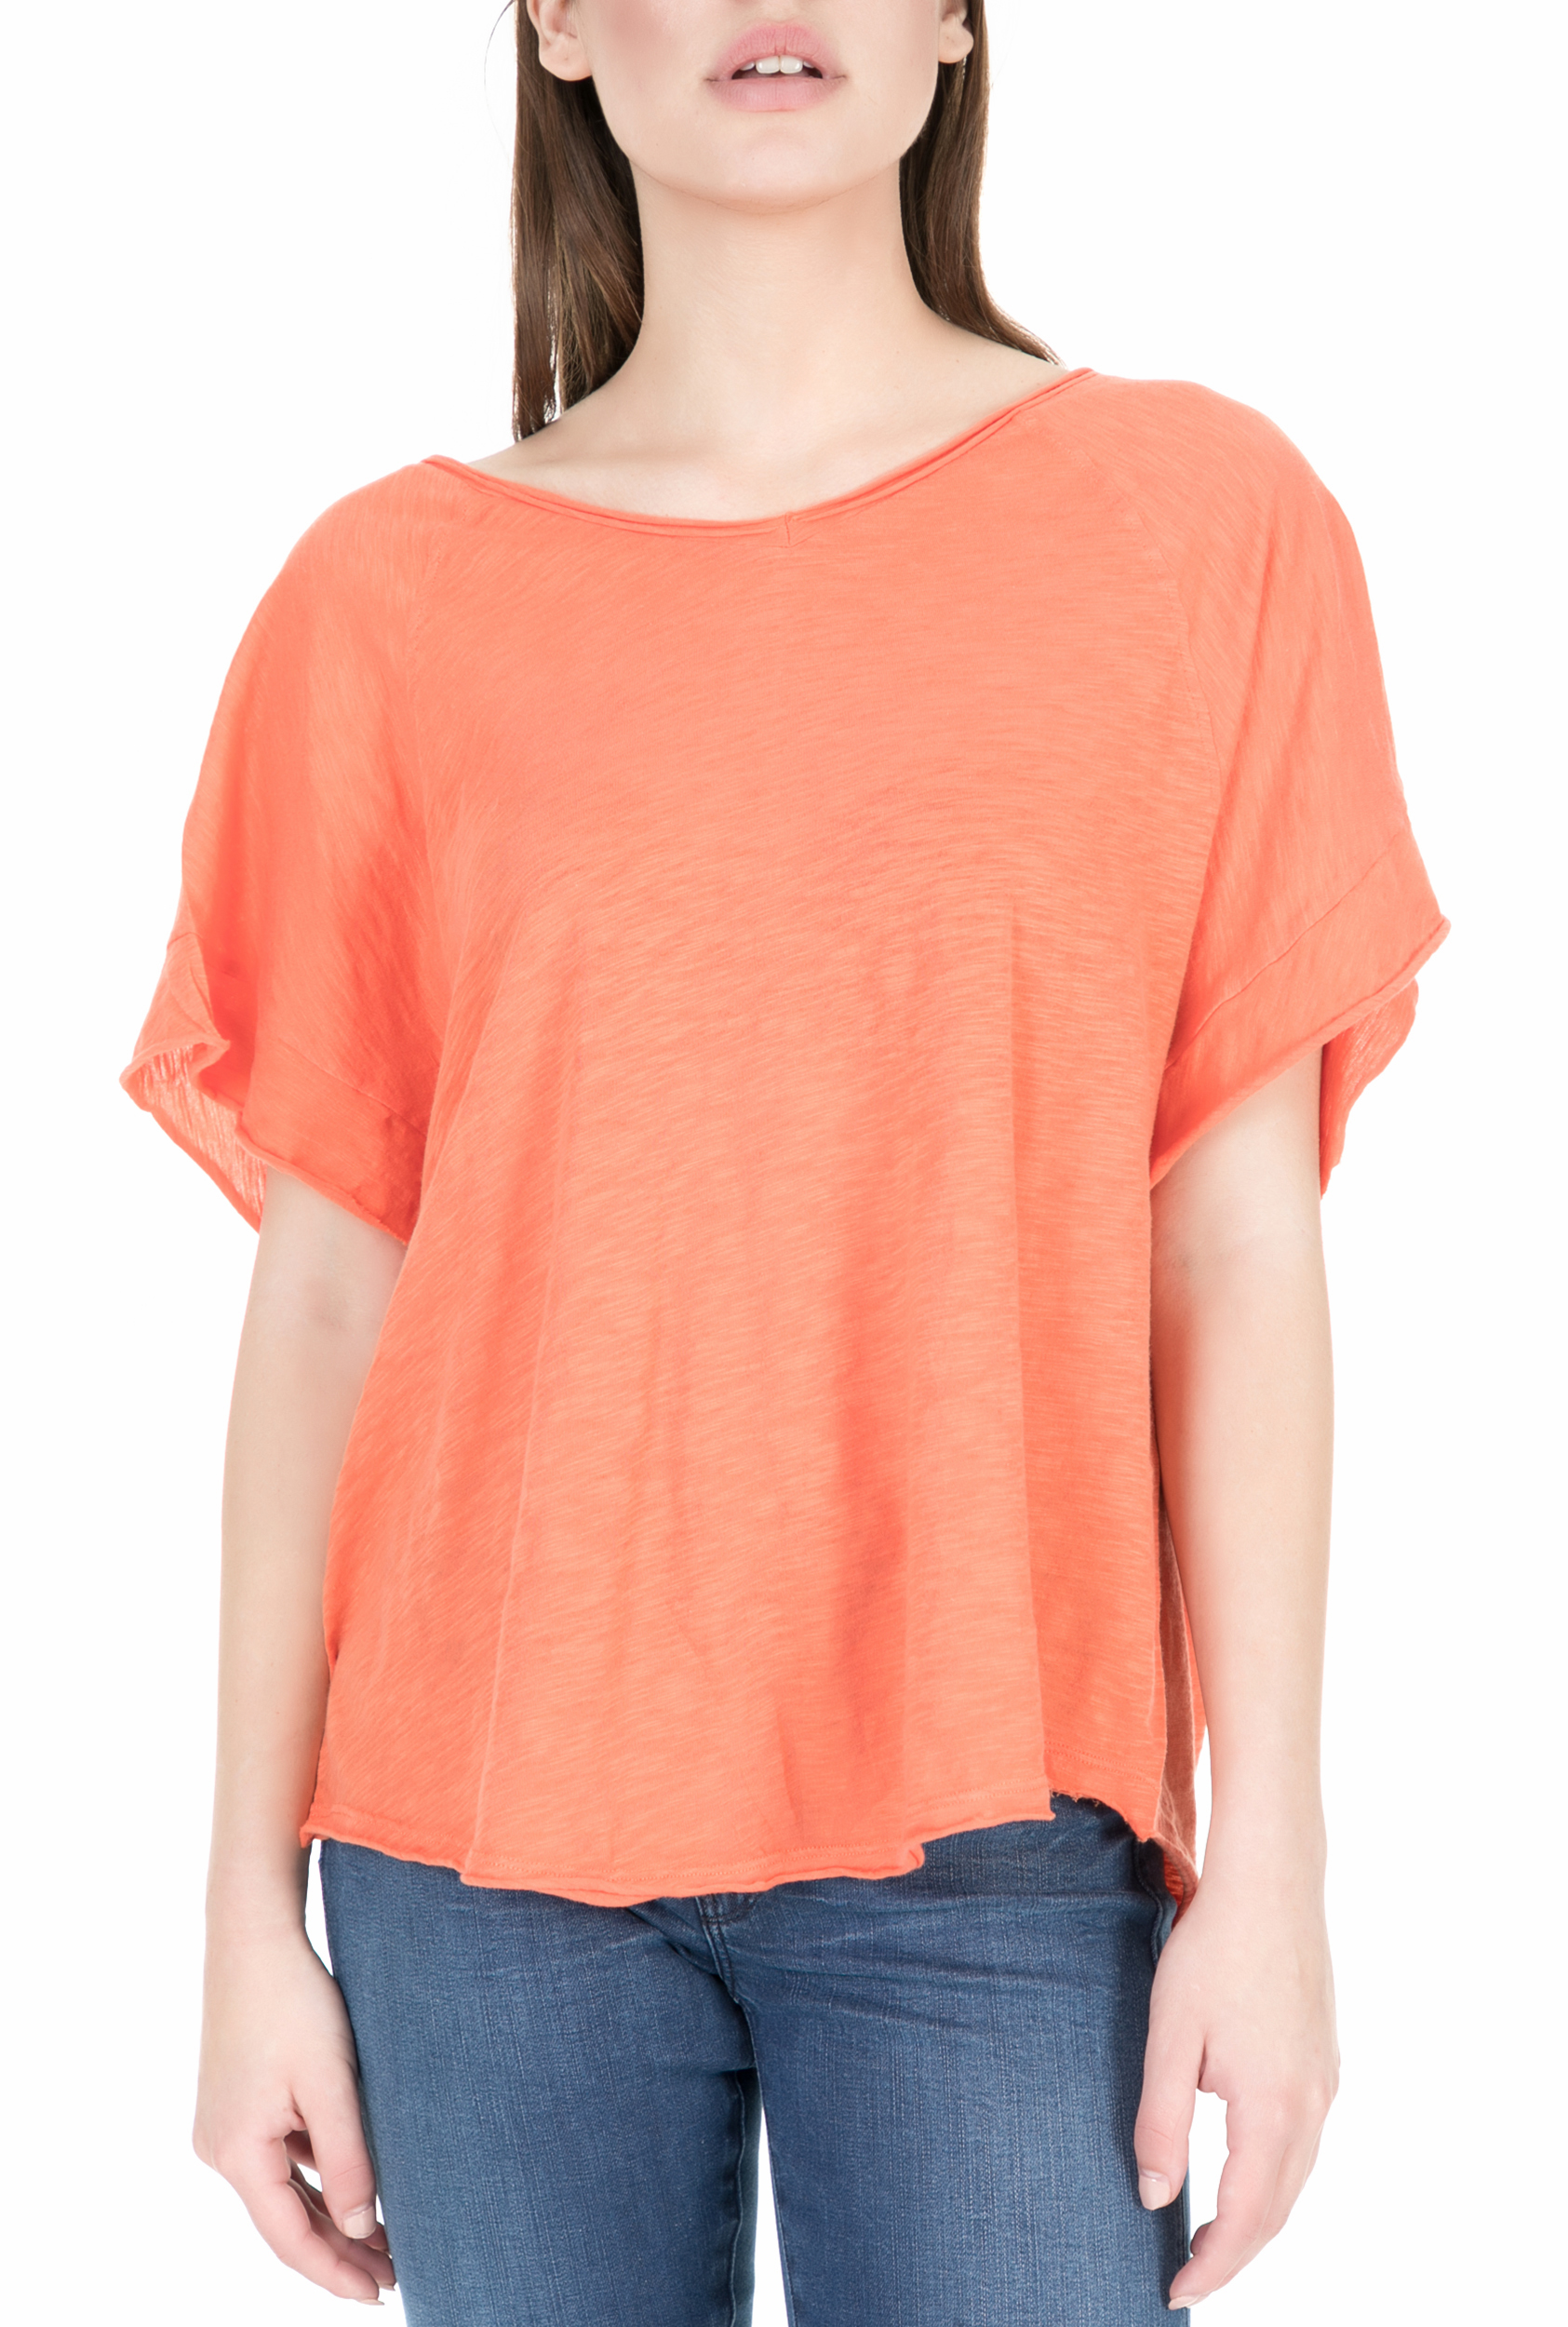 AMERICAN VINTAGE - Γυναικεία κοντομάνικη μπλούζα AMERICAN VINTAGE πορτοκαλί Γυναικεία/Ρούχα/Μπλούζες/Κοντομάνικες